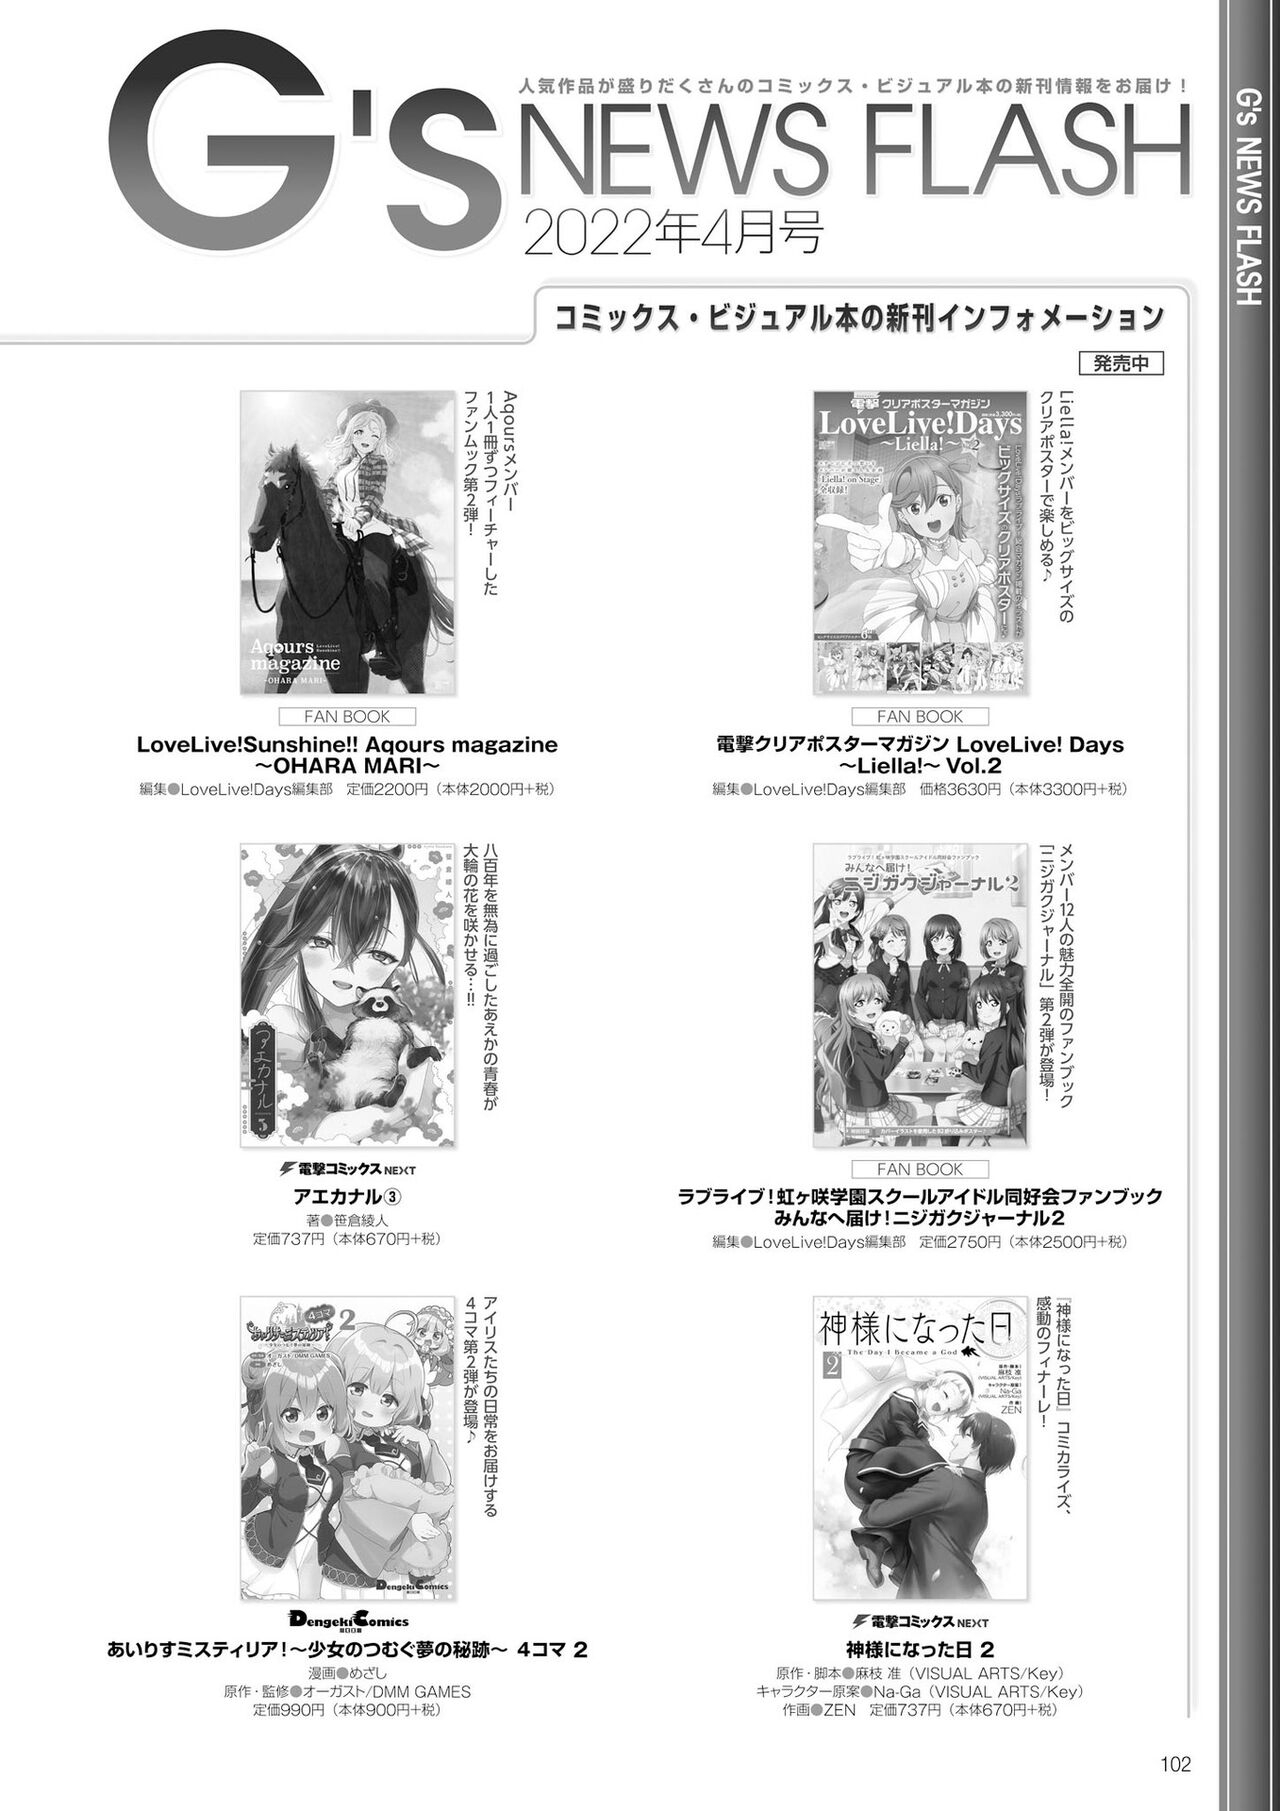 Dengeki G's Magazine #297 - April 2022 99